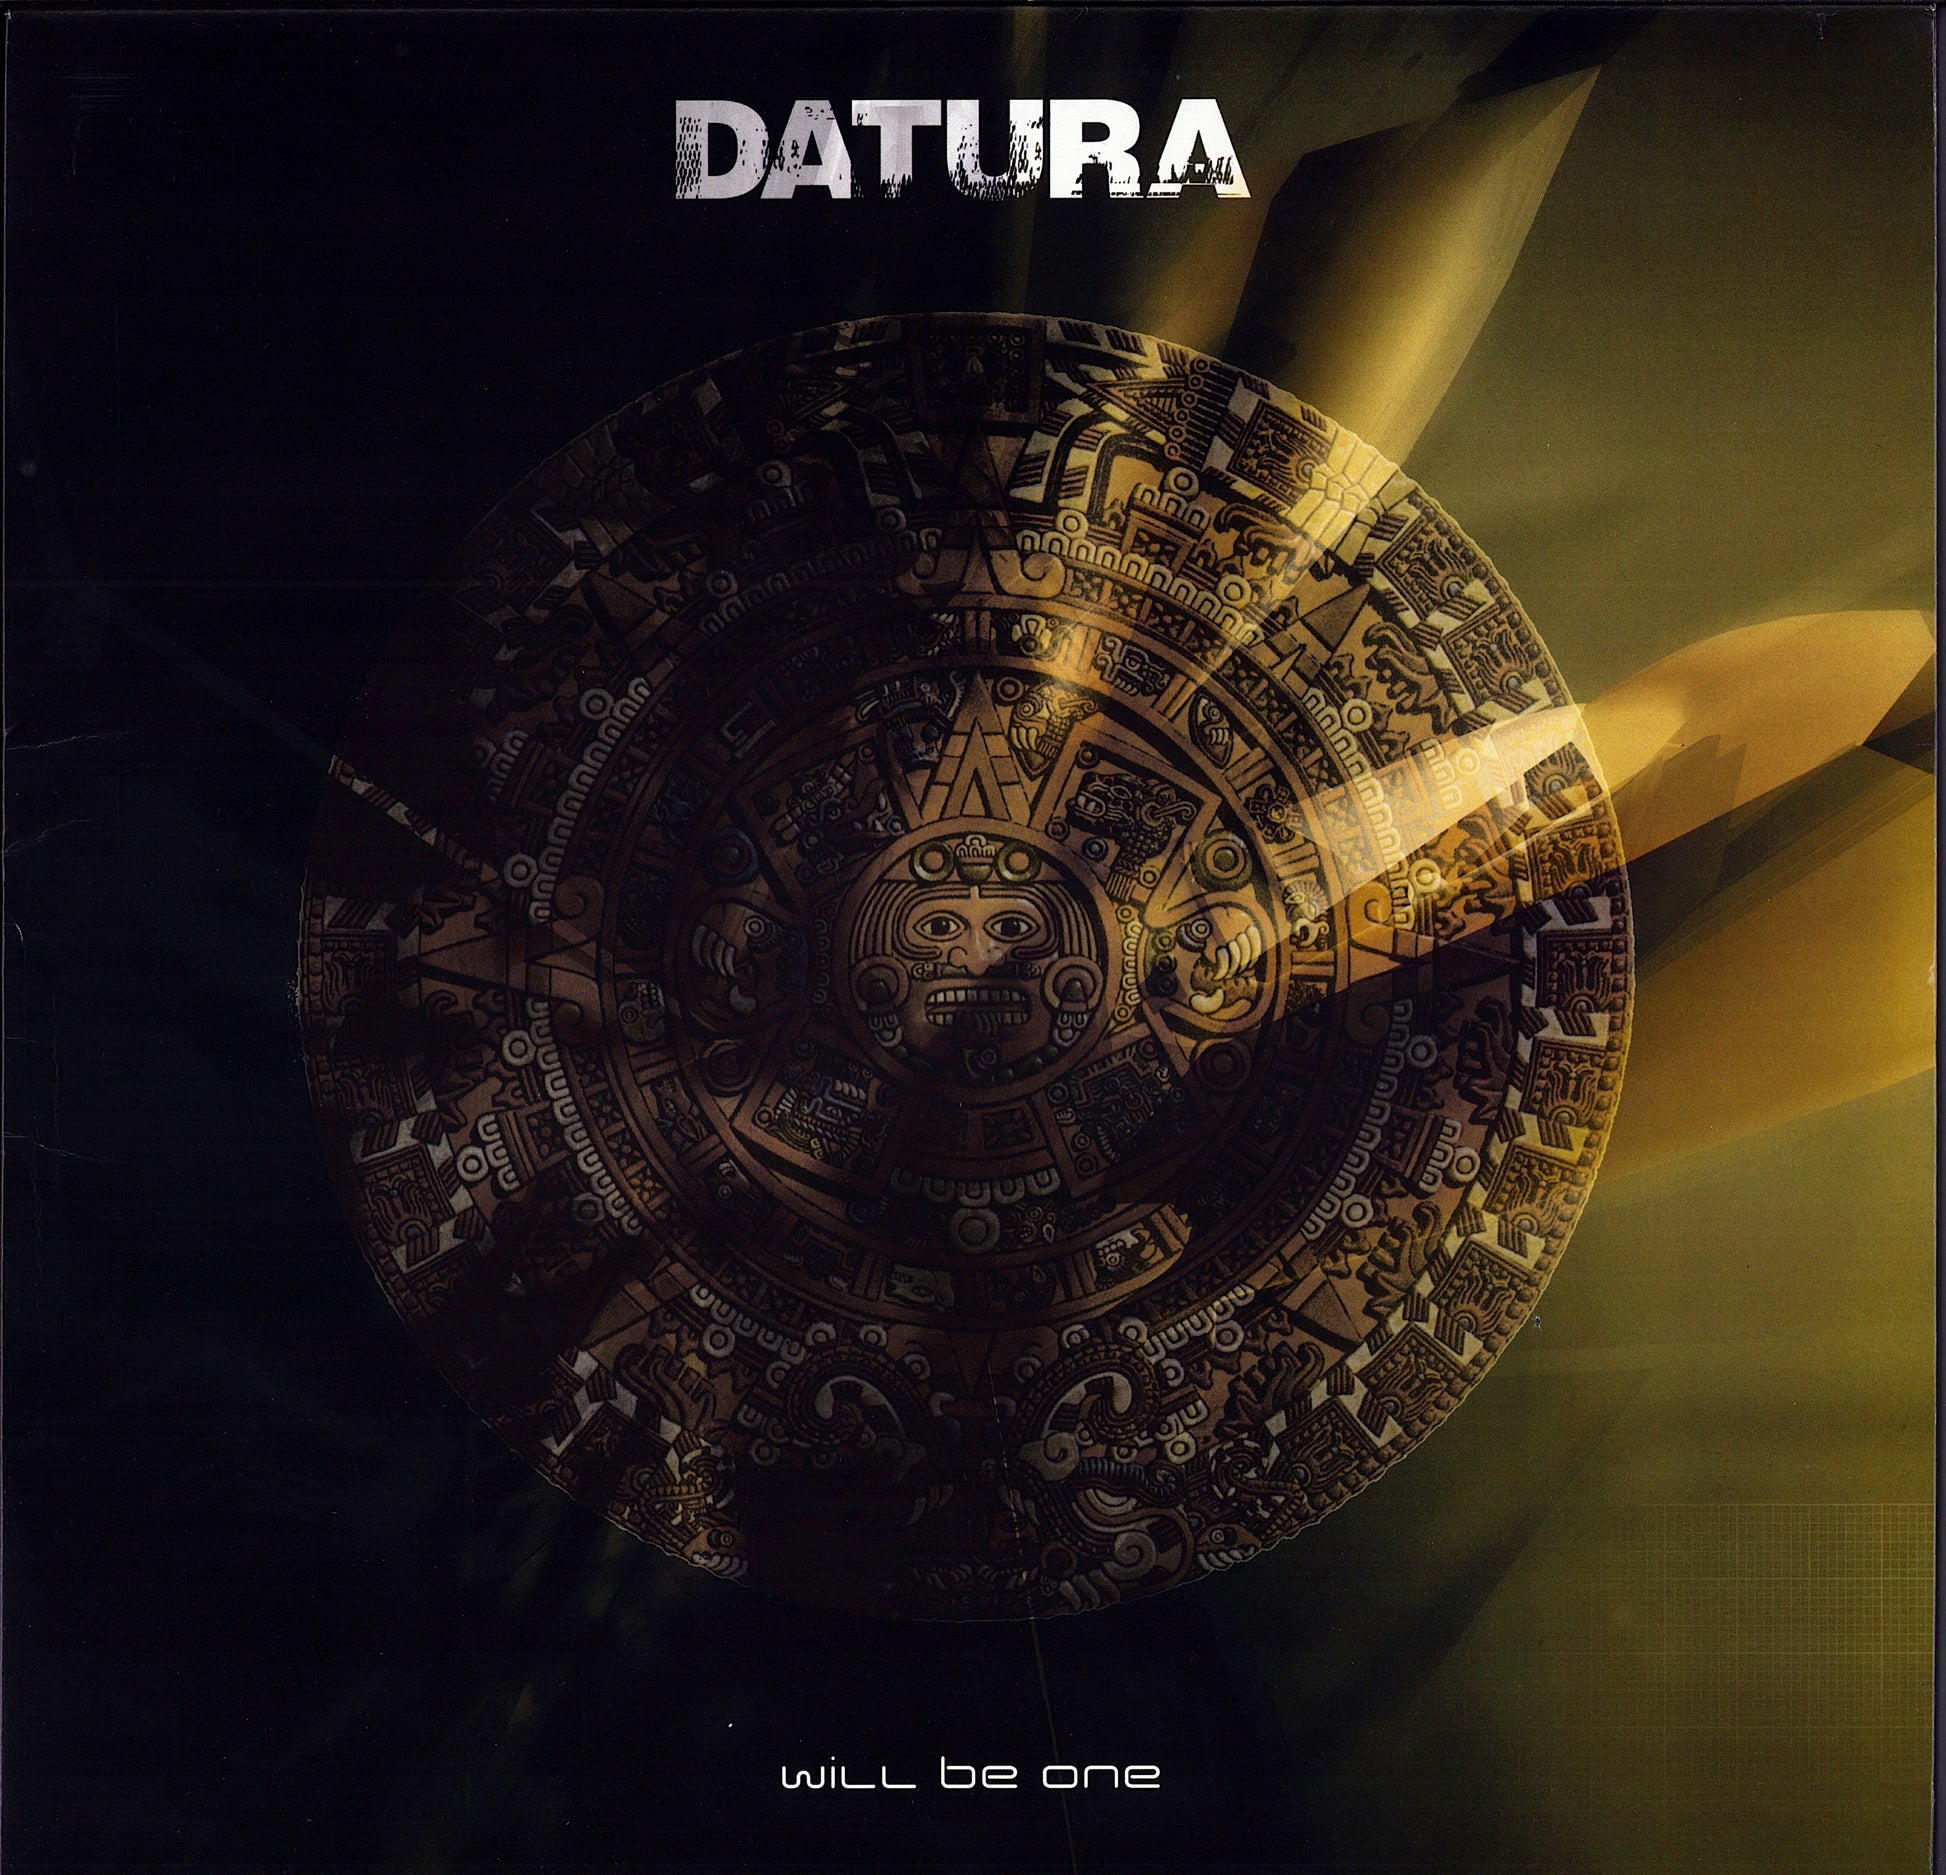 Datura ‎– Will Be One Vinyl 12" Maxi-Single